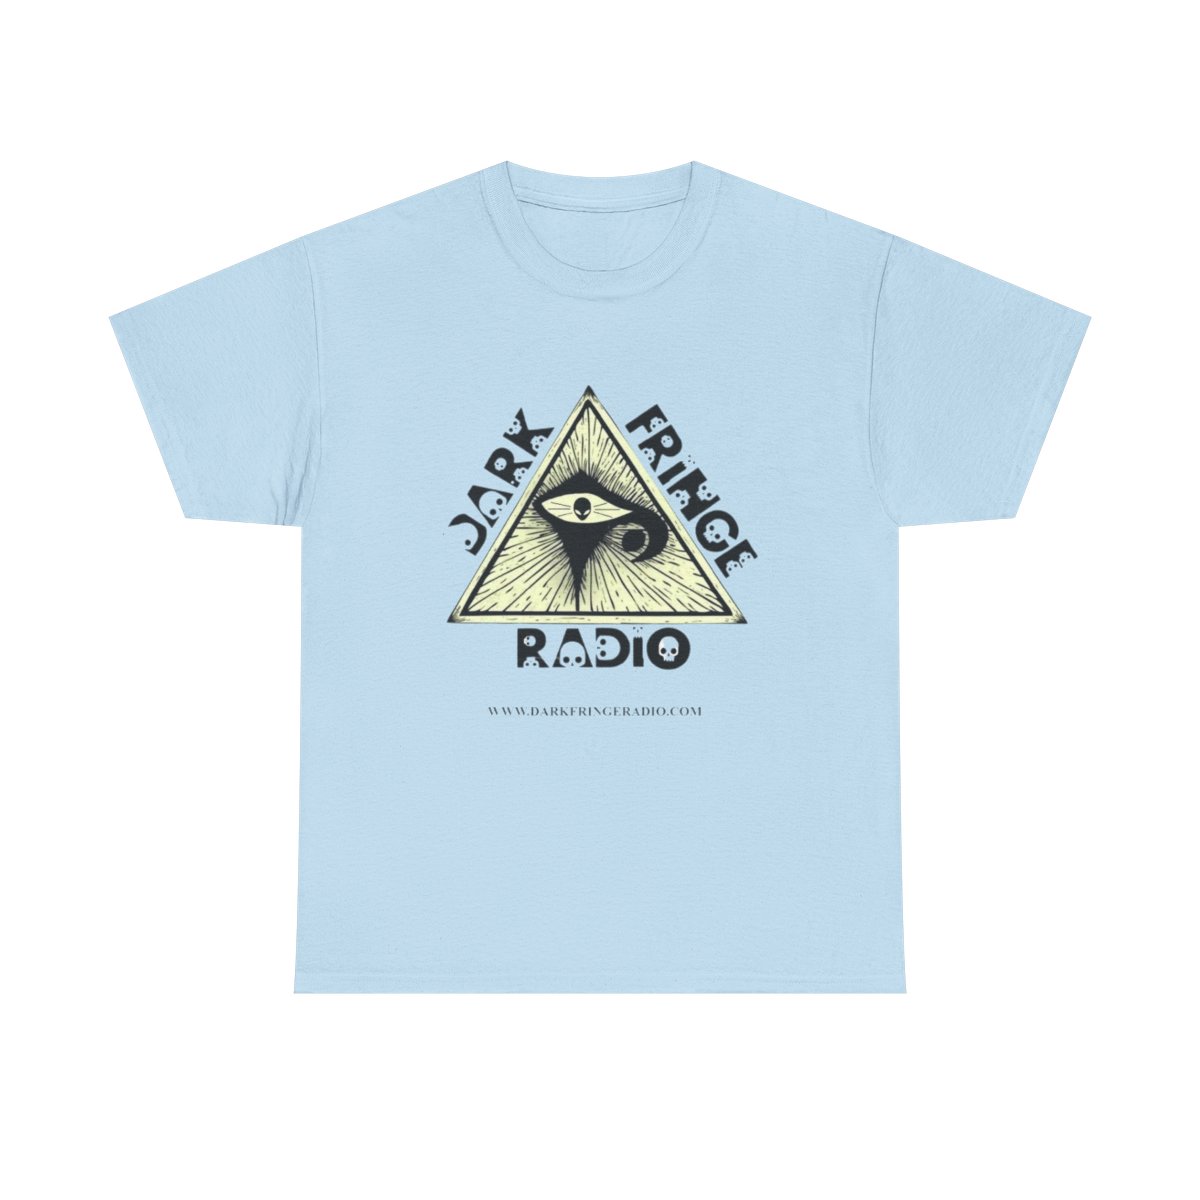 Dark Fringe Radio "Third Eye" T-Shirt product main image